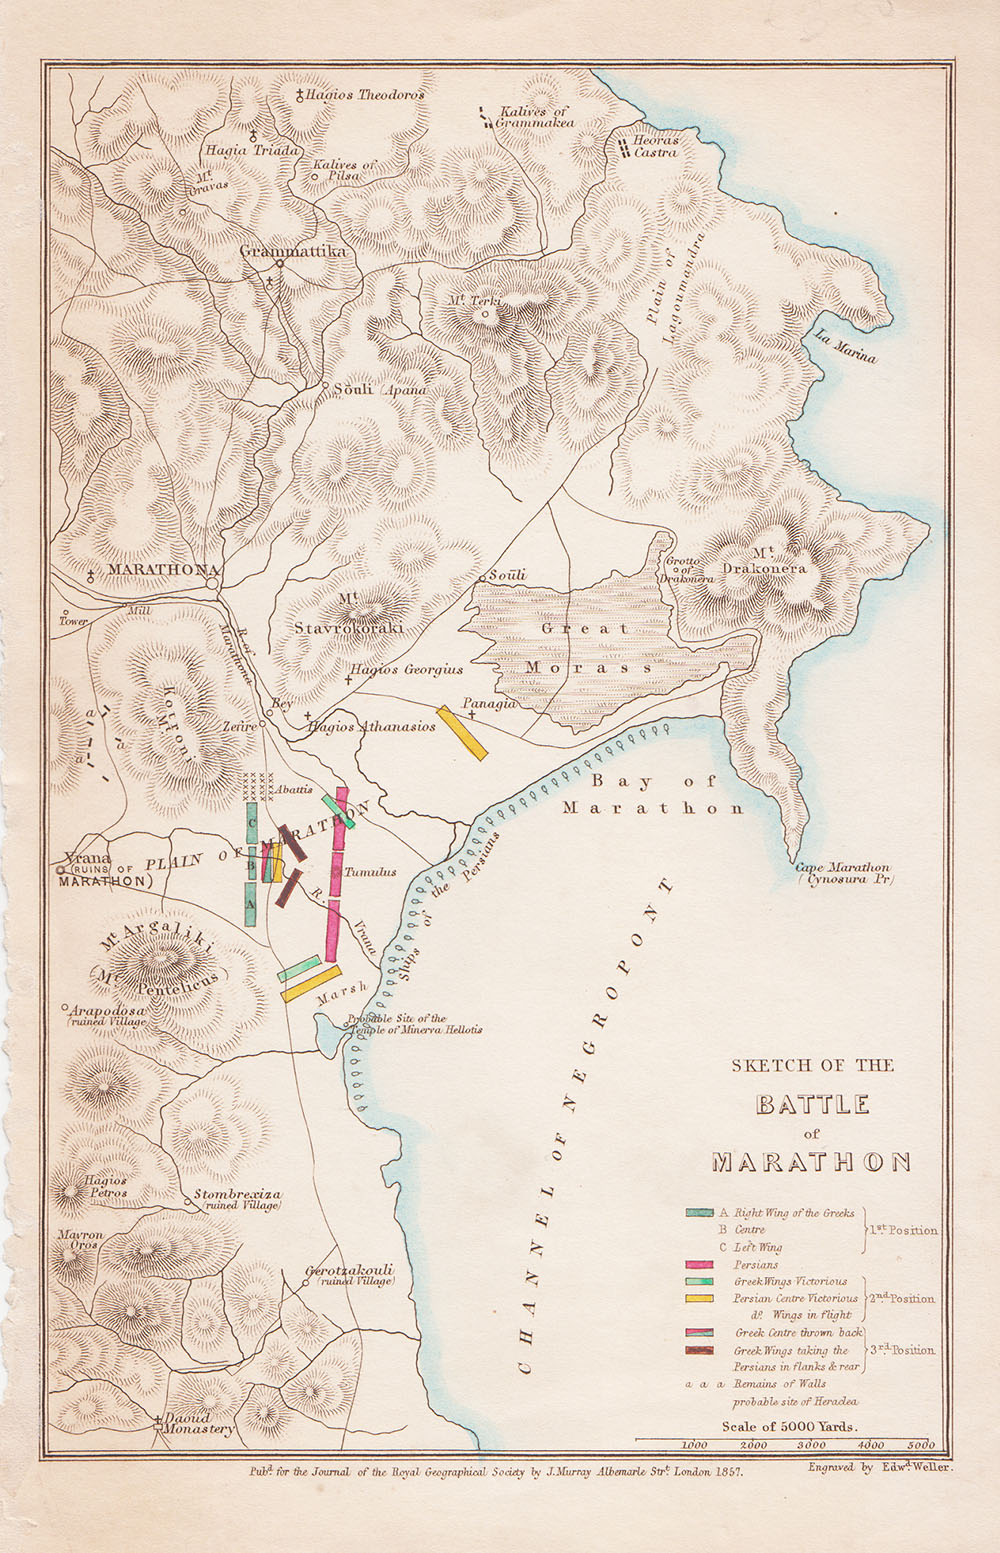 Sketch of the Battle of Marathon